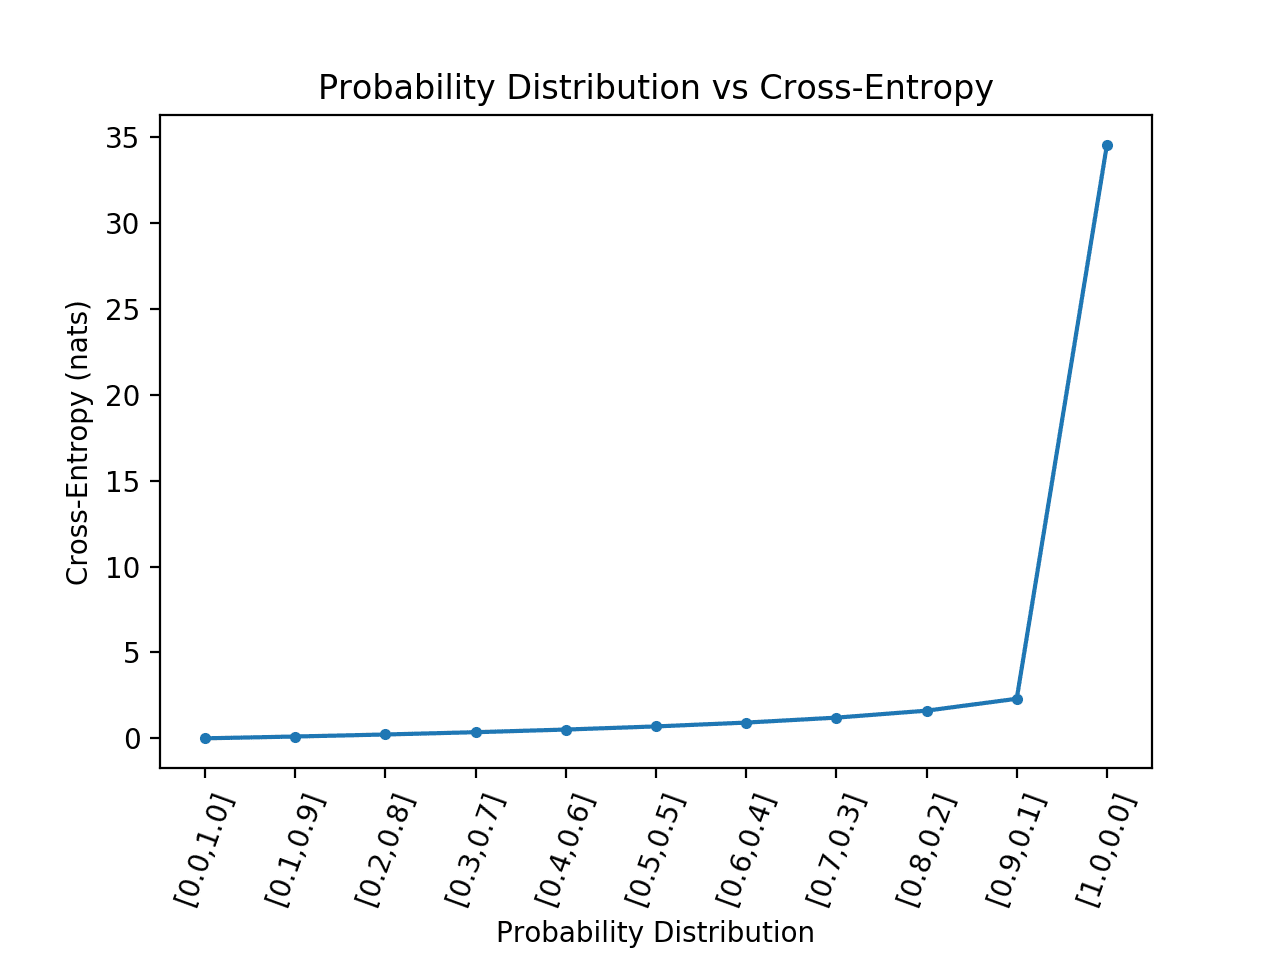 Line Plot of Probability Distribution vs Cross-Entropy for a Binary Classification Task